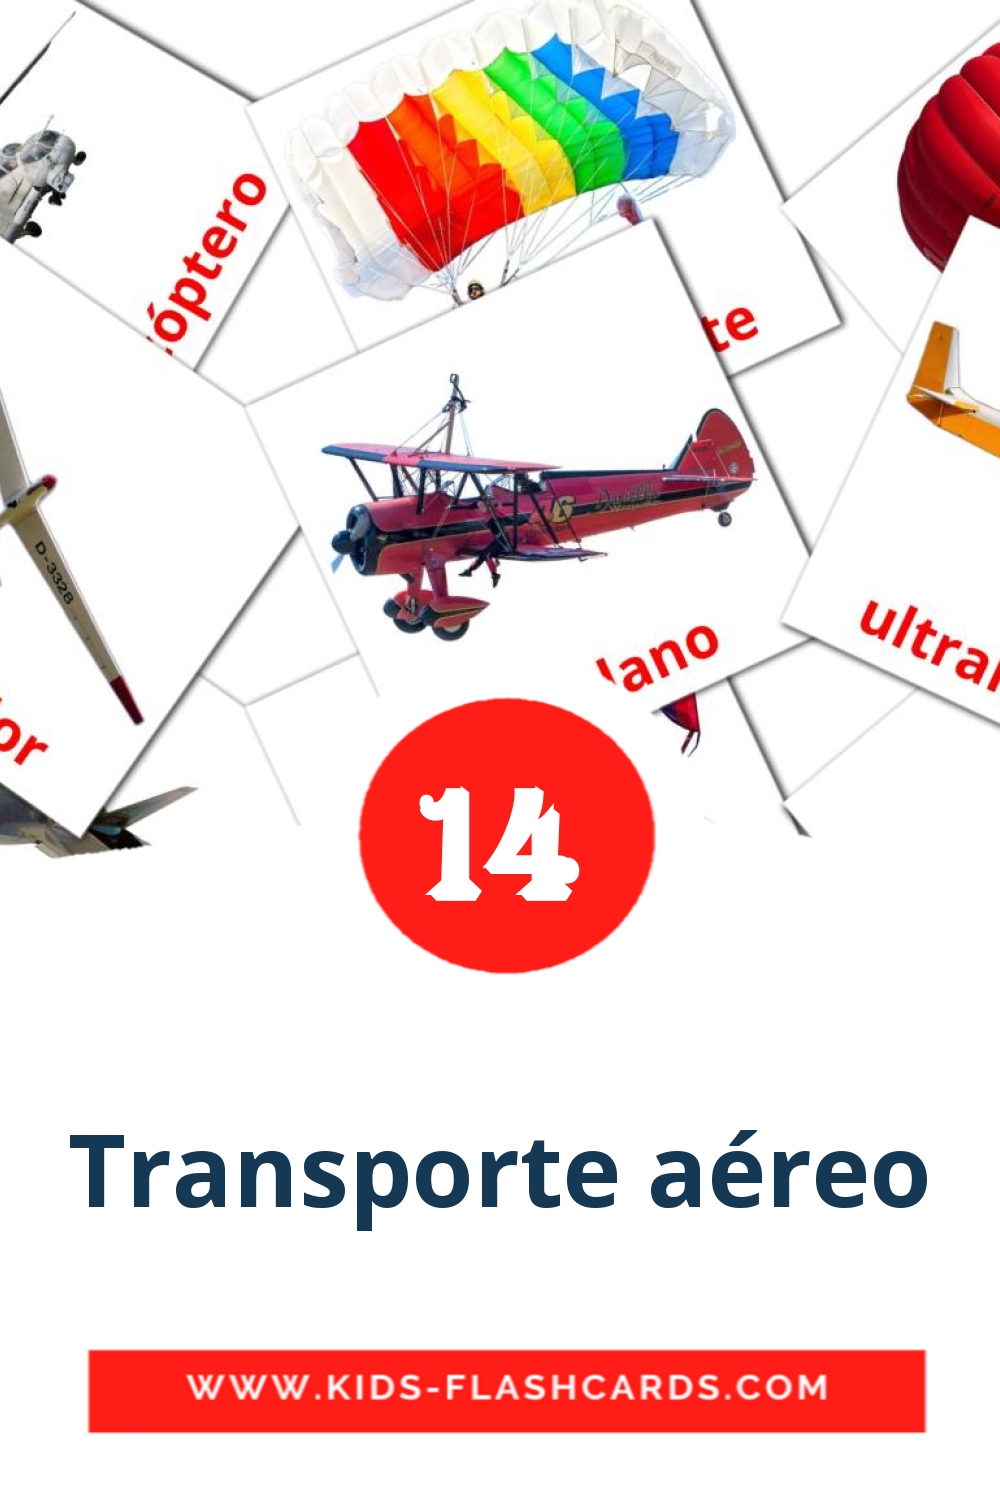 Aeronave на испанском для Детского Сада (14 карточек)